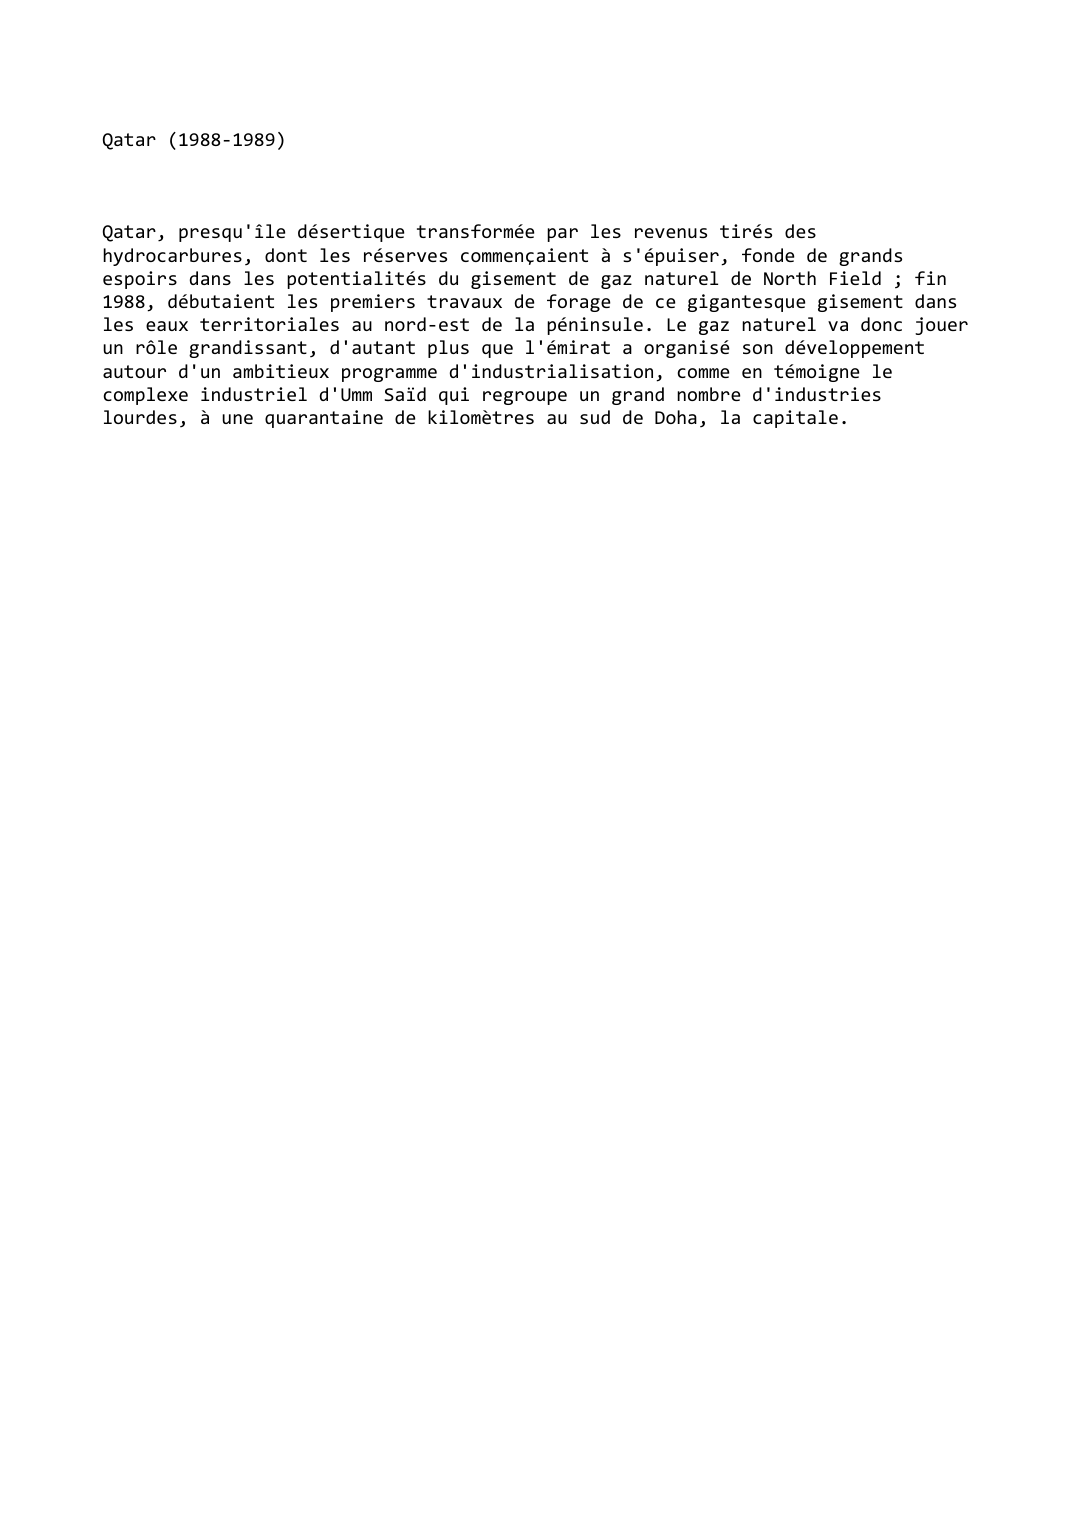 Prévisualisation du document Qatar (1988-1989)